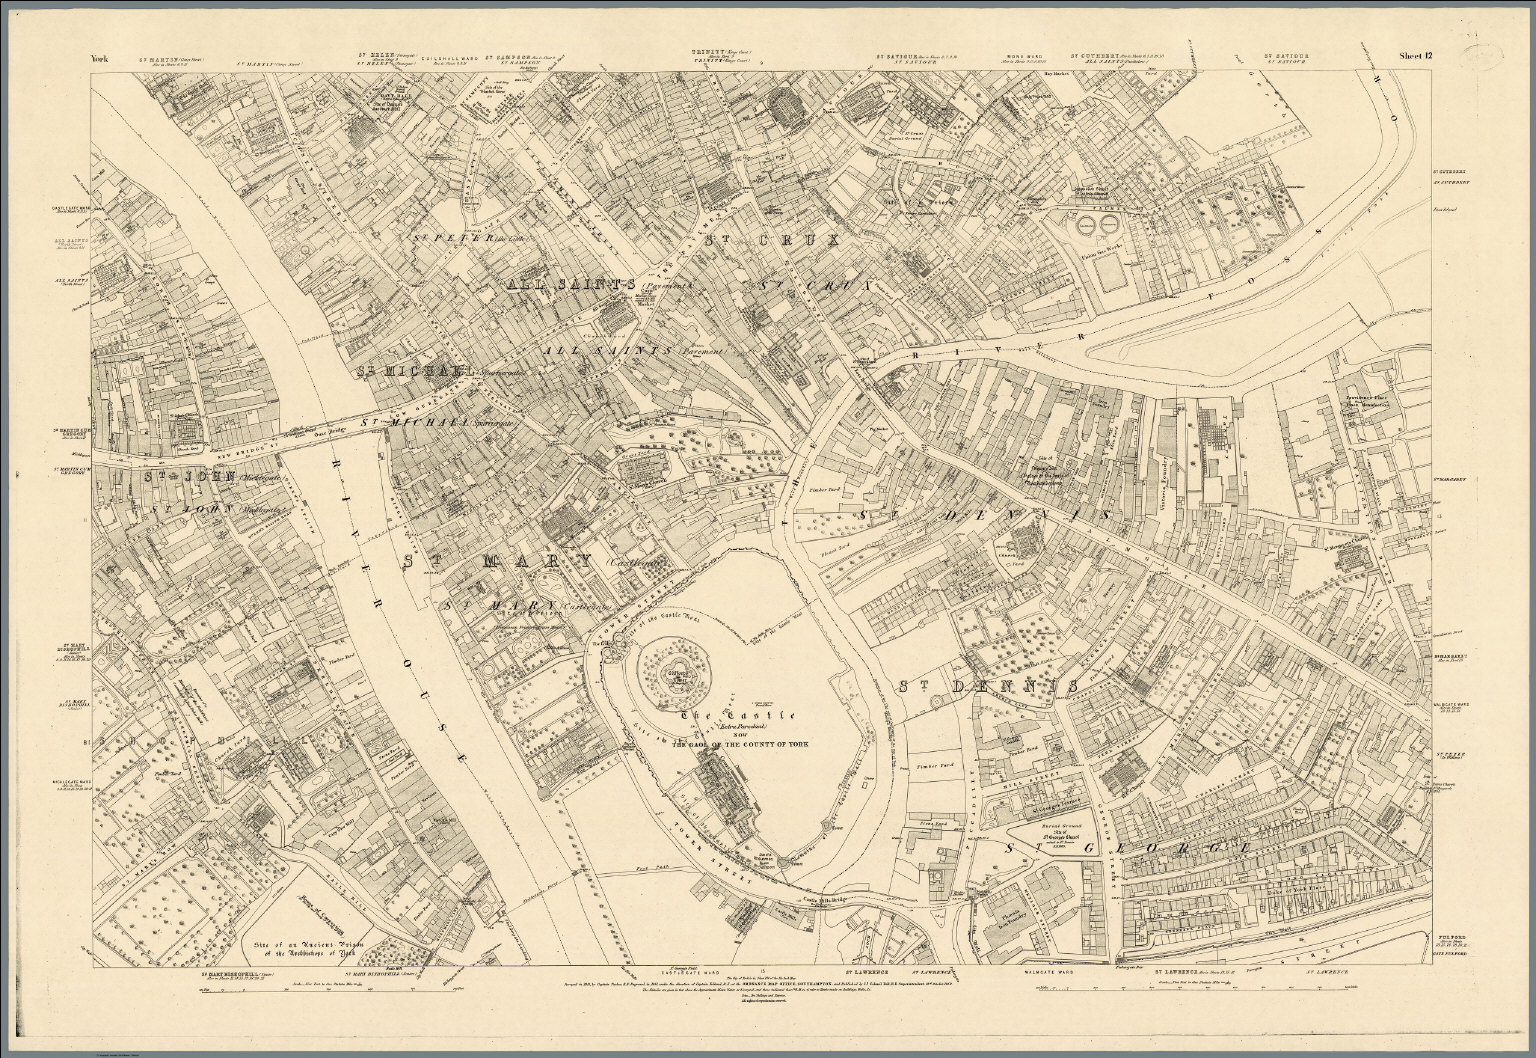 Sheet 12 Plan Of York 1852 David Rumsey Historical Map Collection 6237